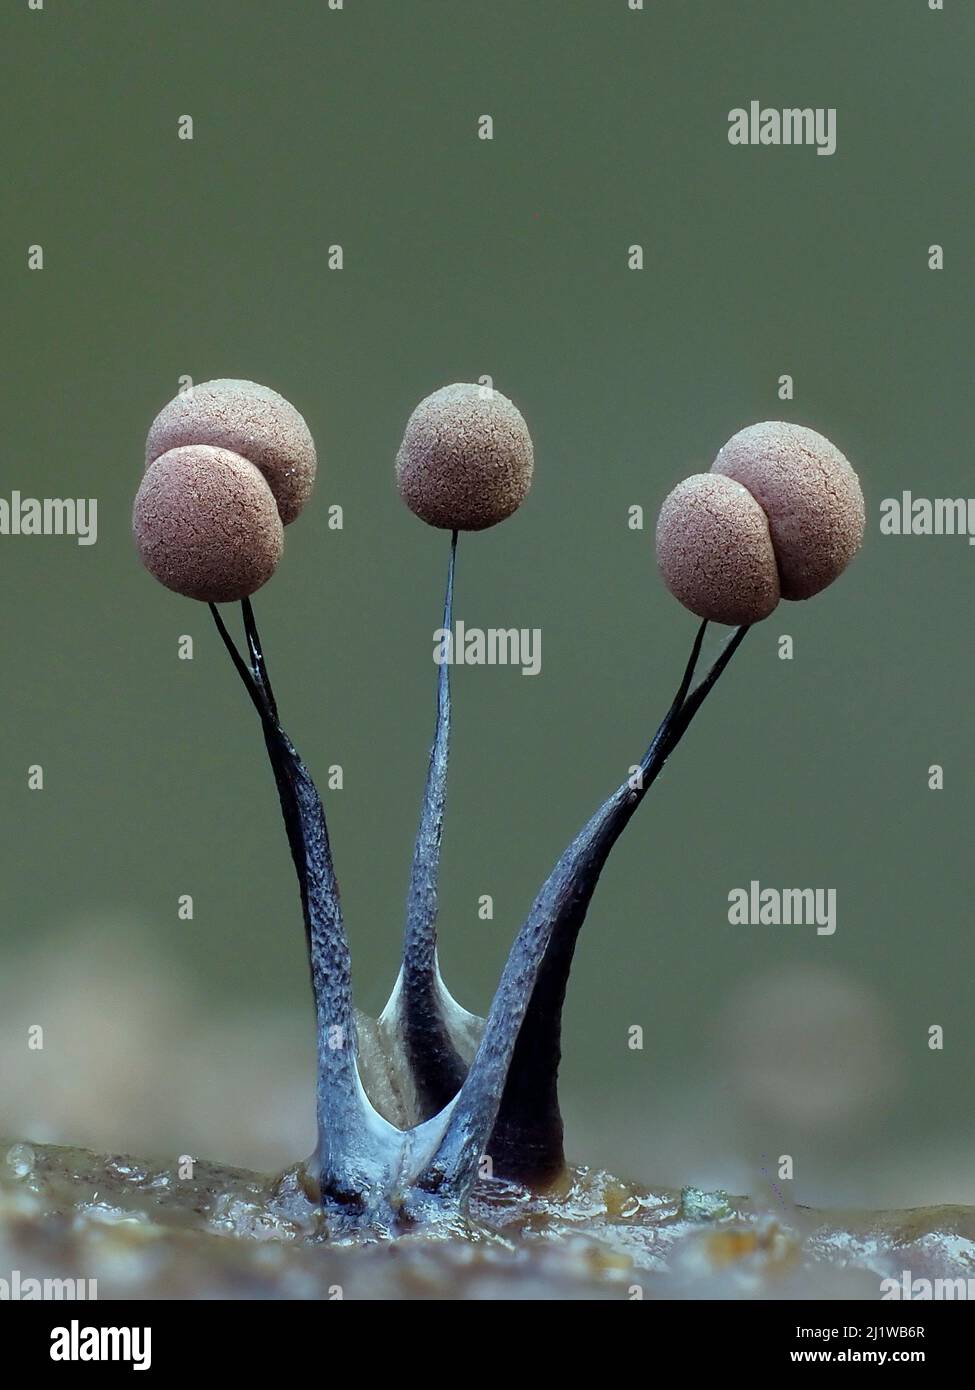 Slime mould (Comatricha nigra), in reproductive phase. Close-up of spore-bearing fruiting bodies (sporangia). Buckinghamshire, UK. Stock Photo